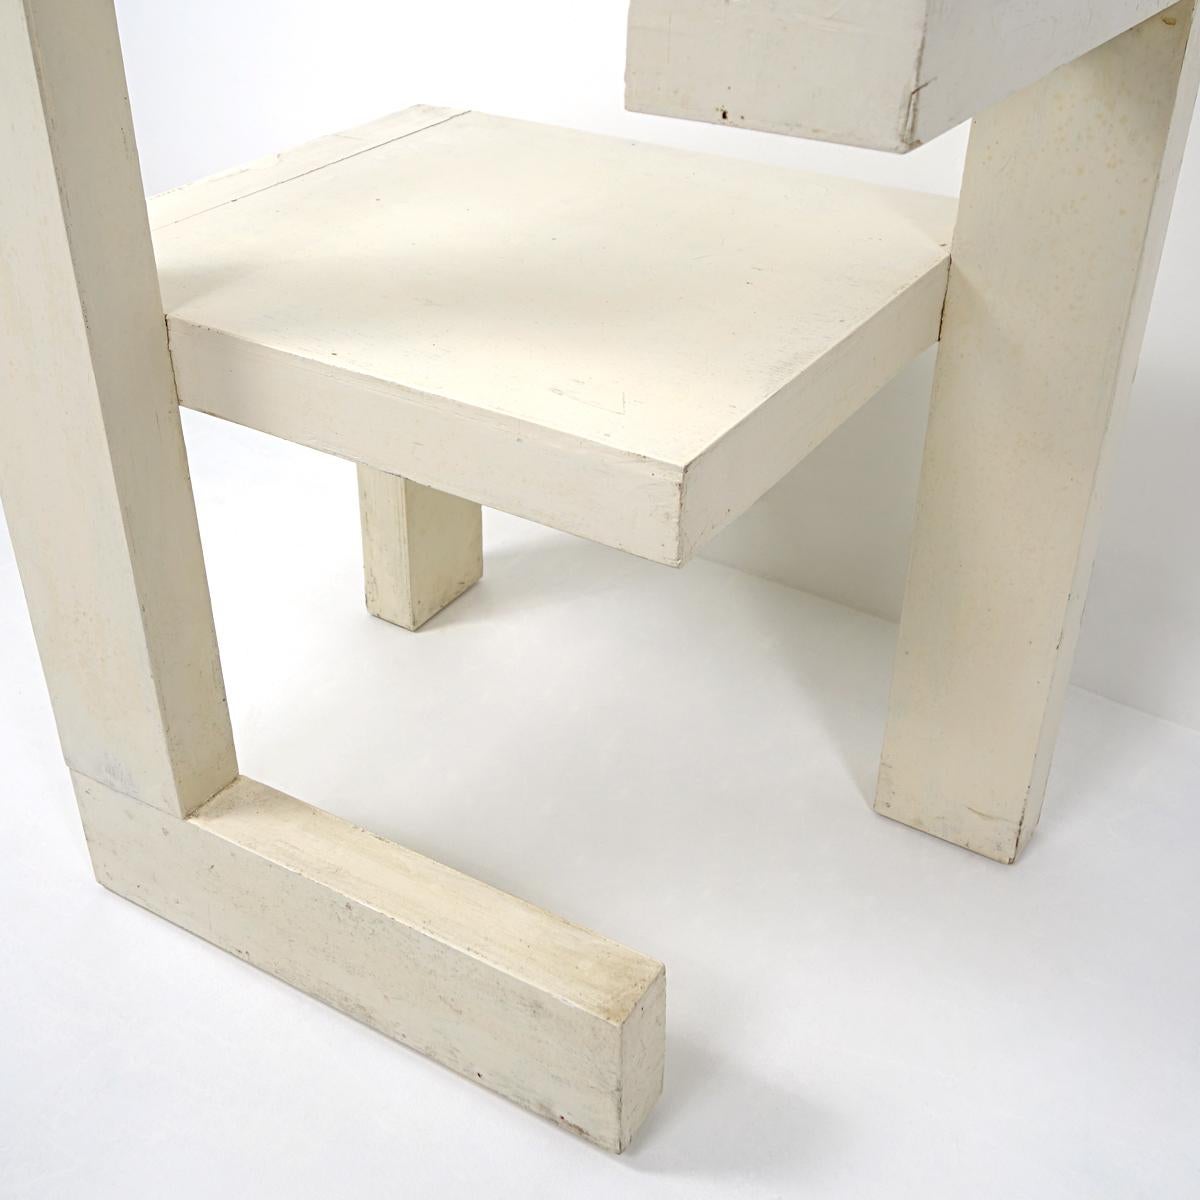 Modernist White Wooden Chair 